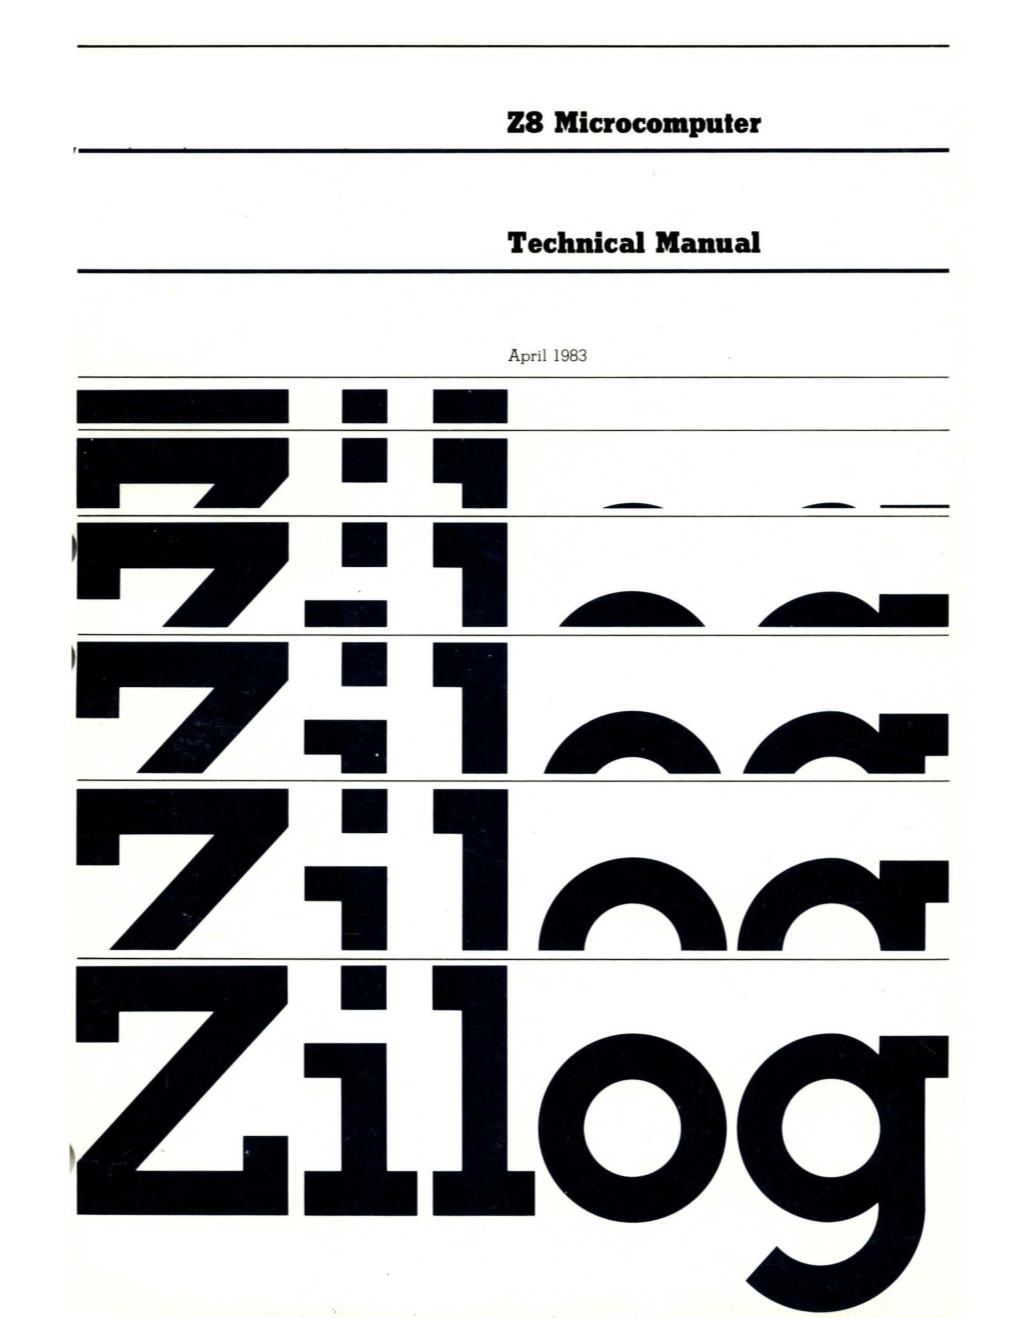 Z8 Microcomputer Technical Manual